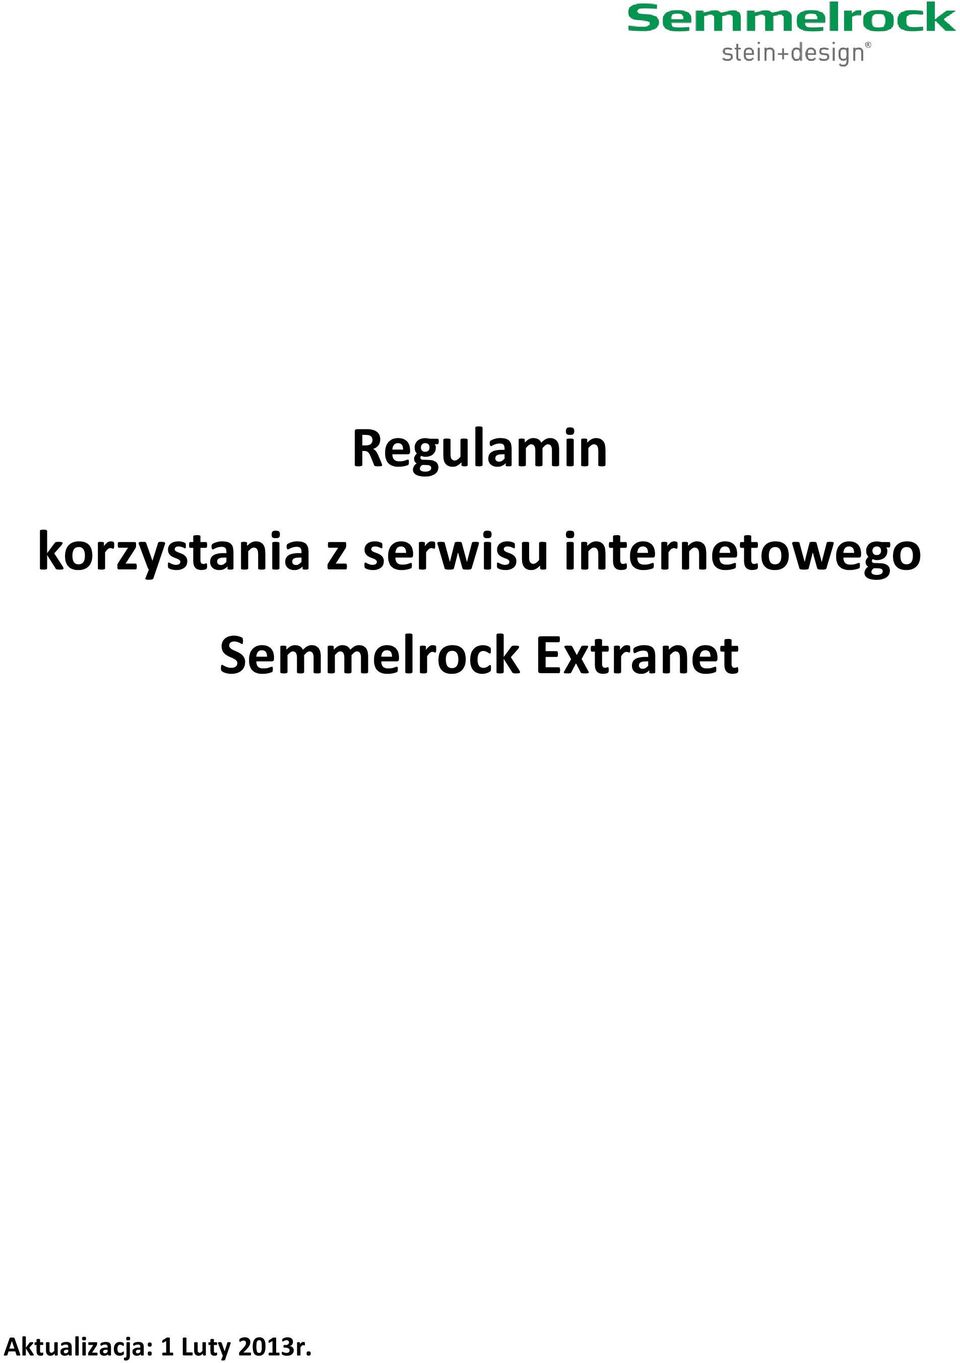 Semmelrock Extranet